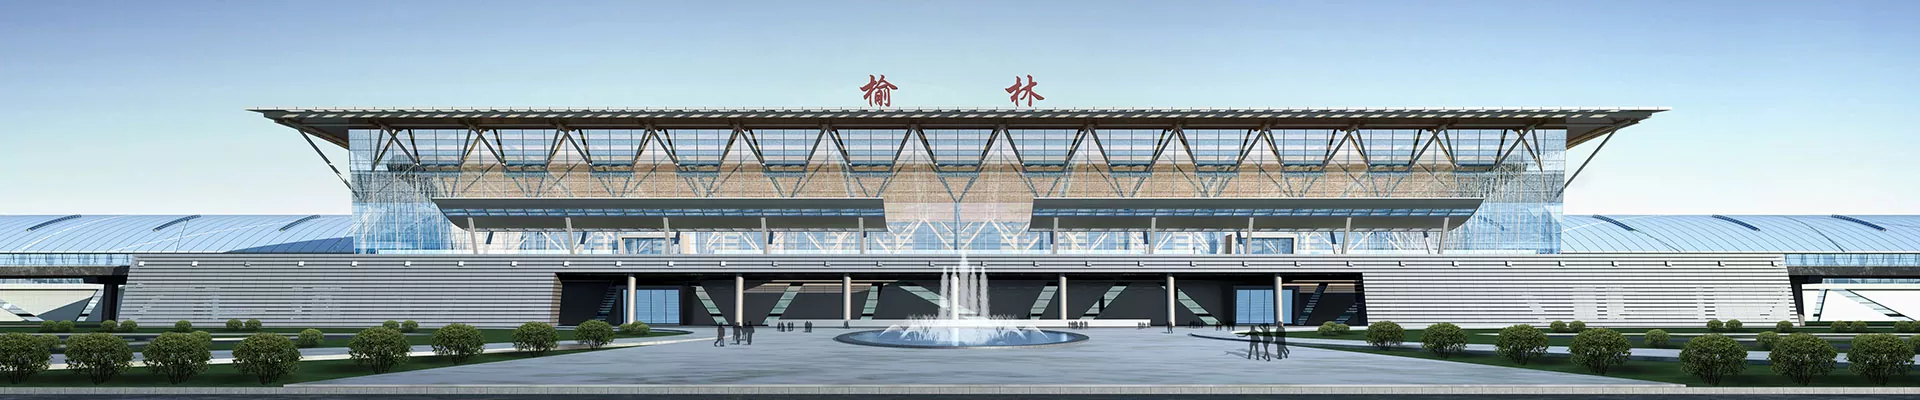 Airport Ferro Structure